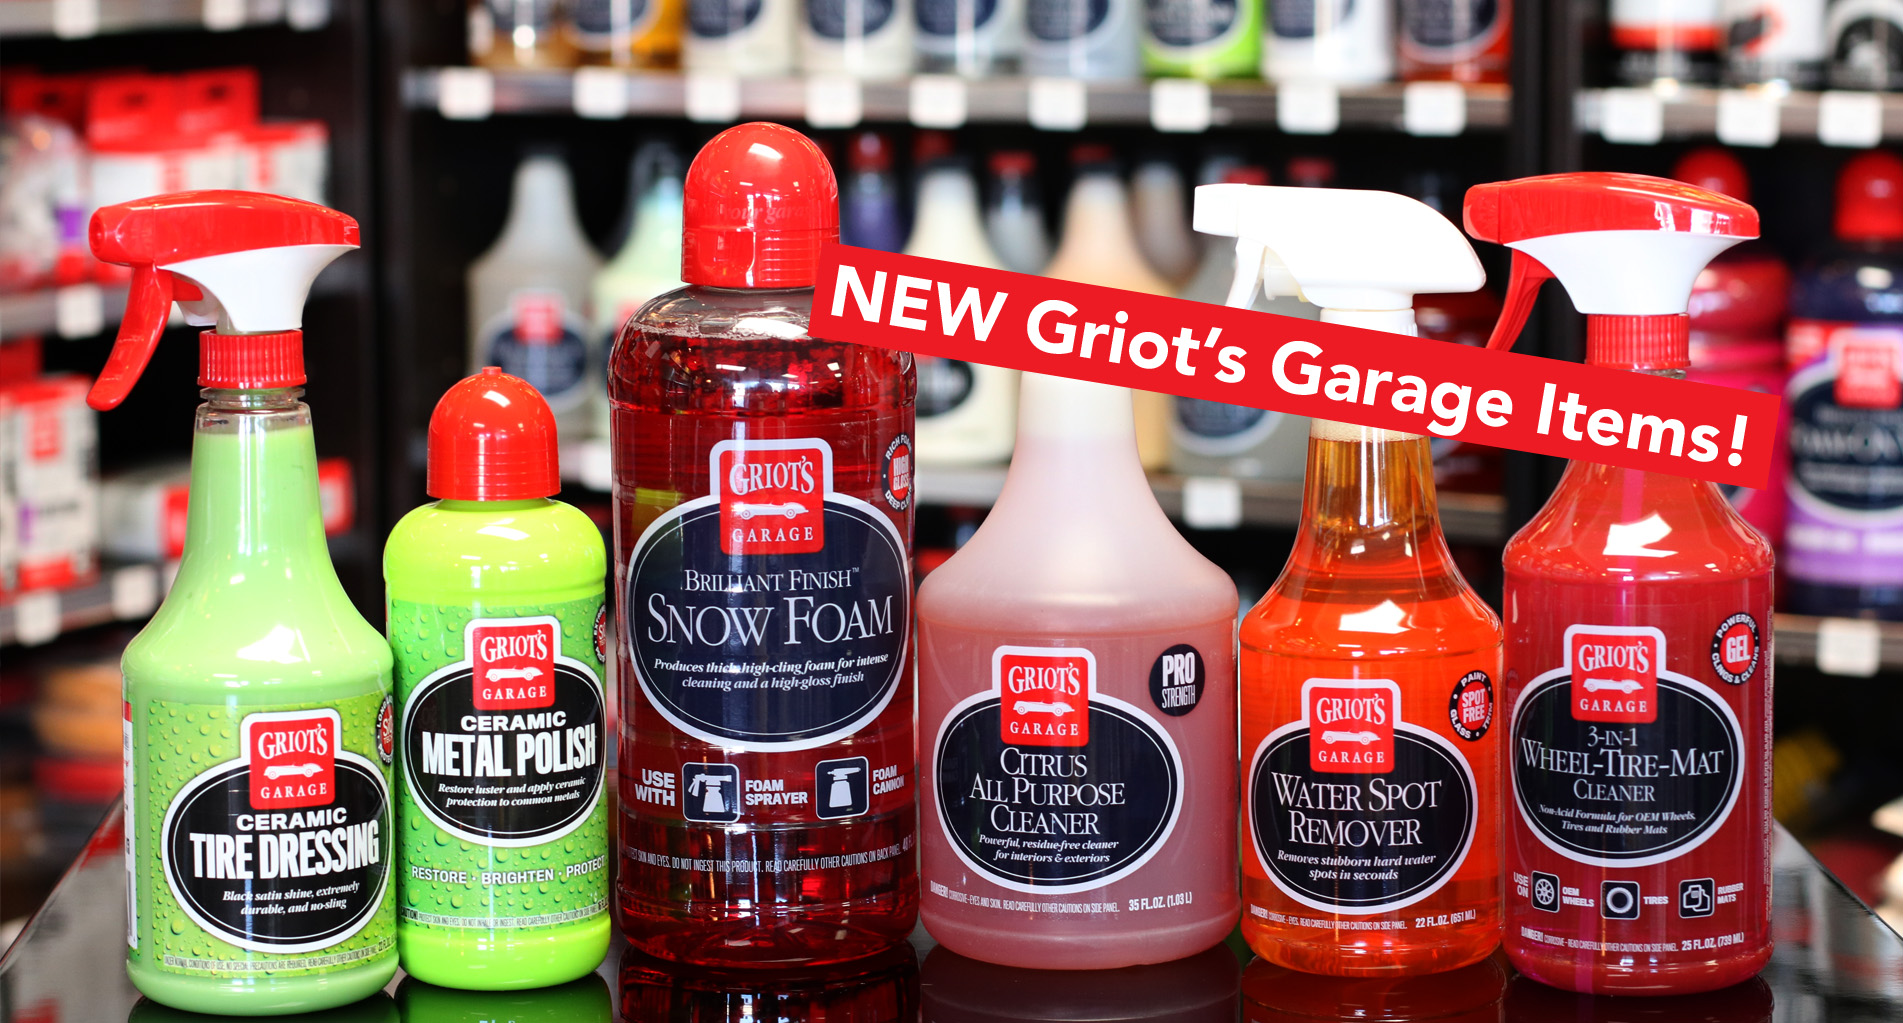 Griot's Garage Cordless Foamer and Sprayer